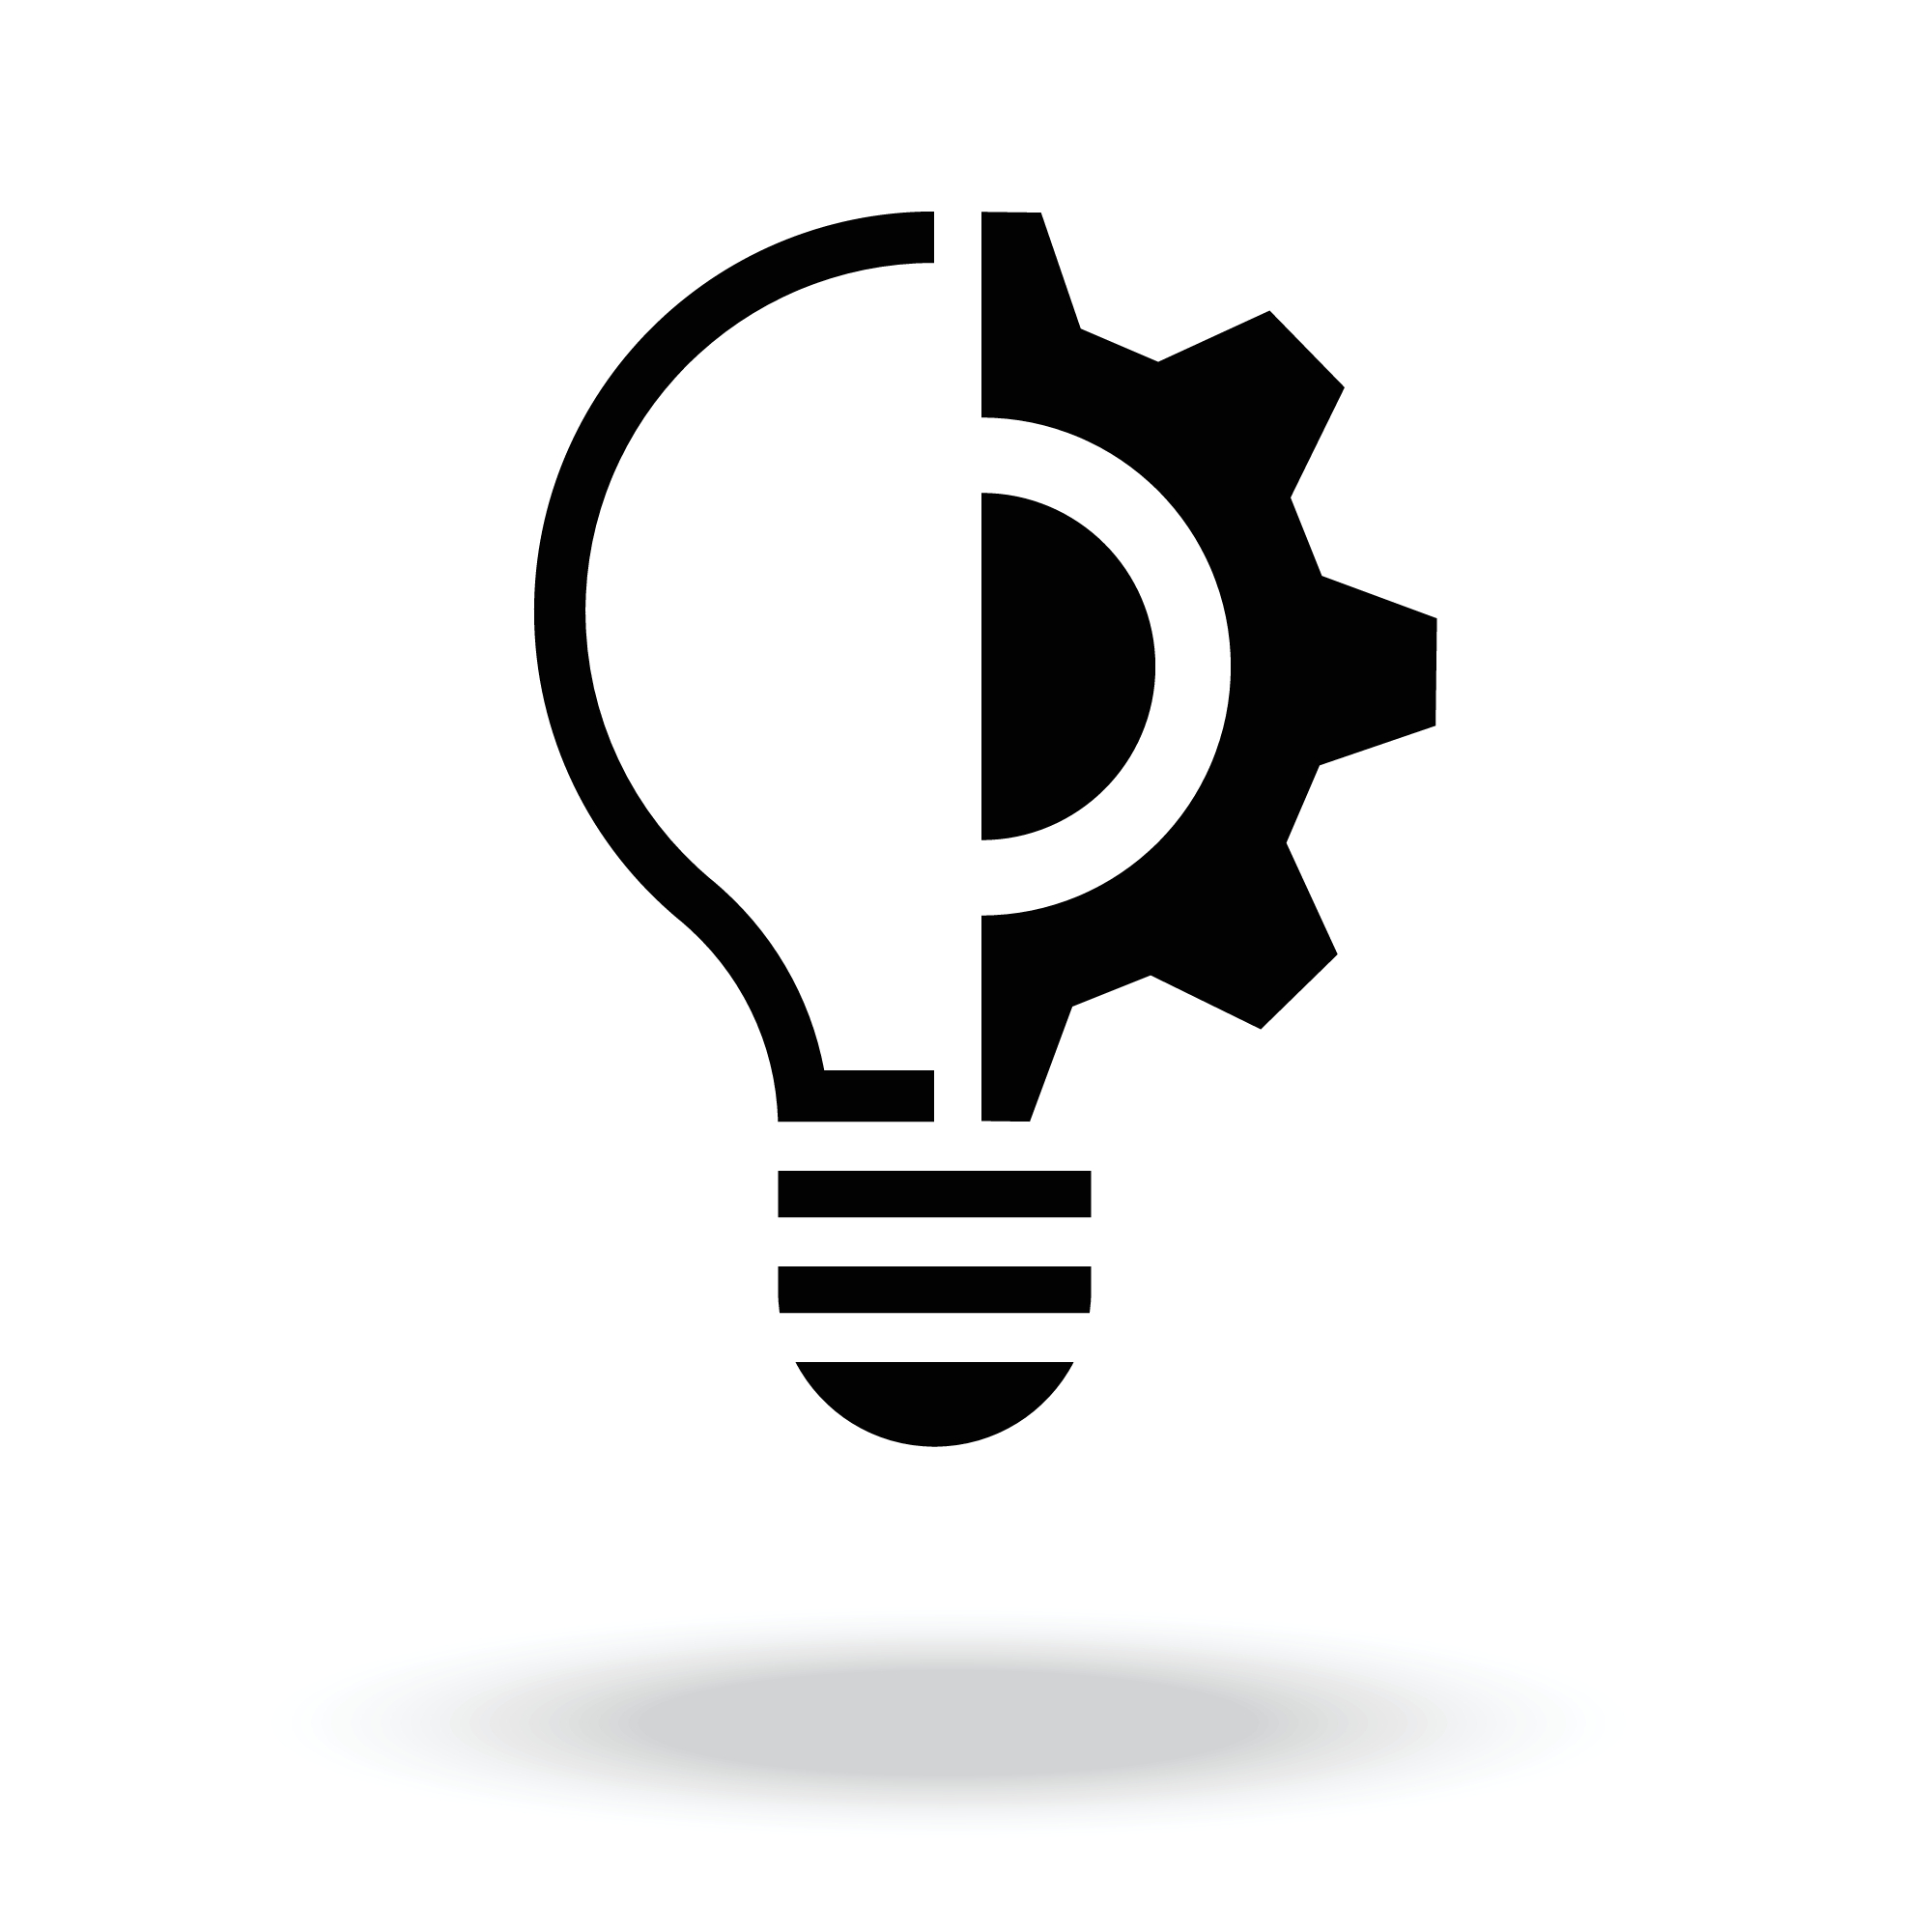 logo image: half a light bulb half a gear logo